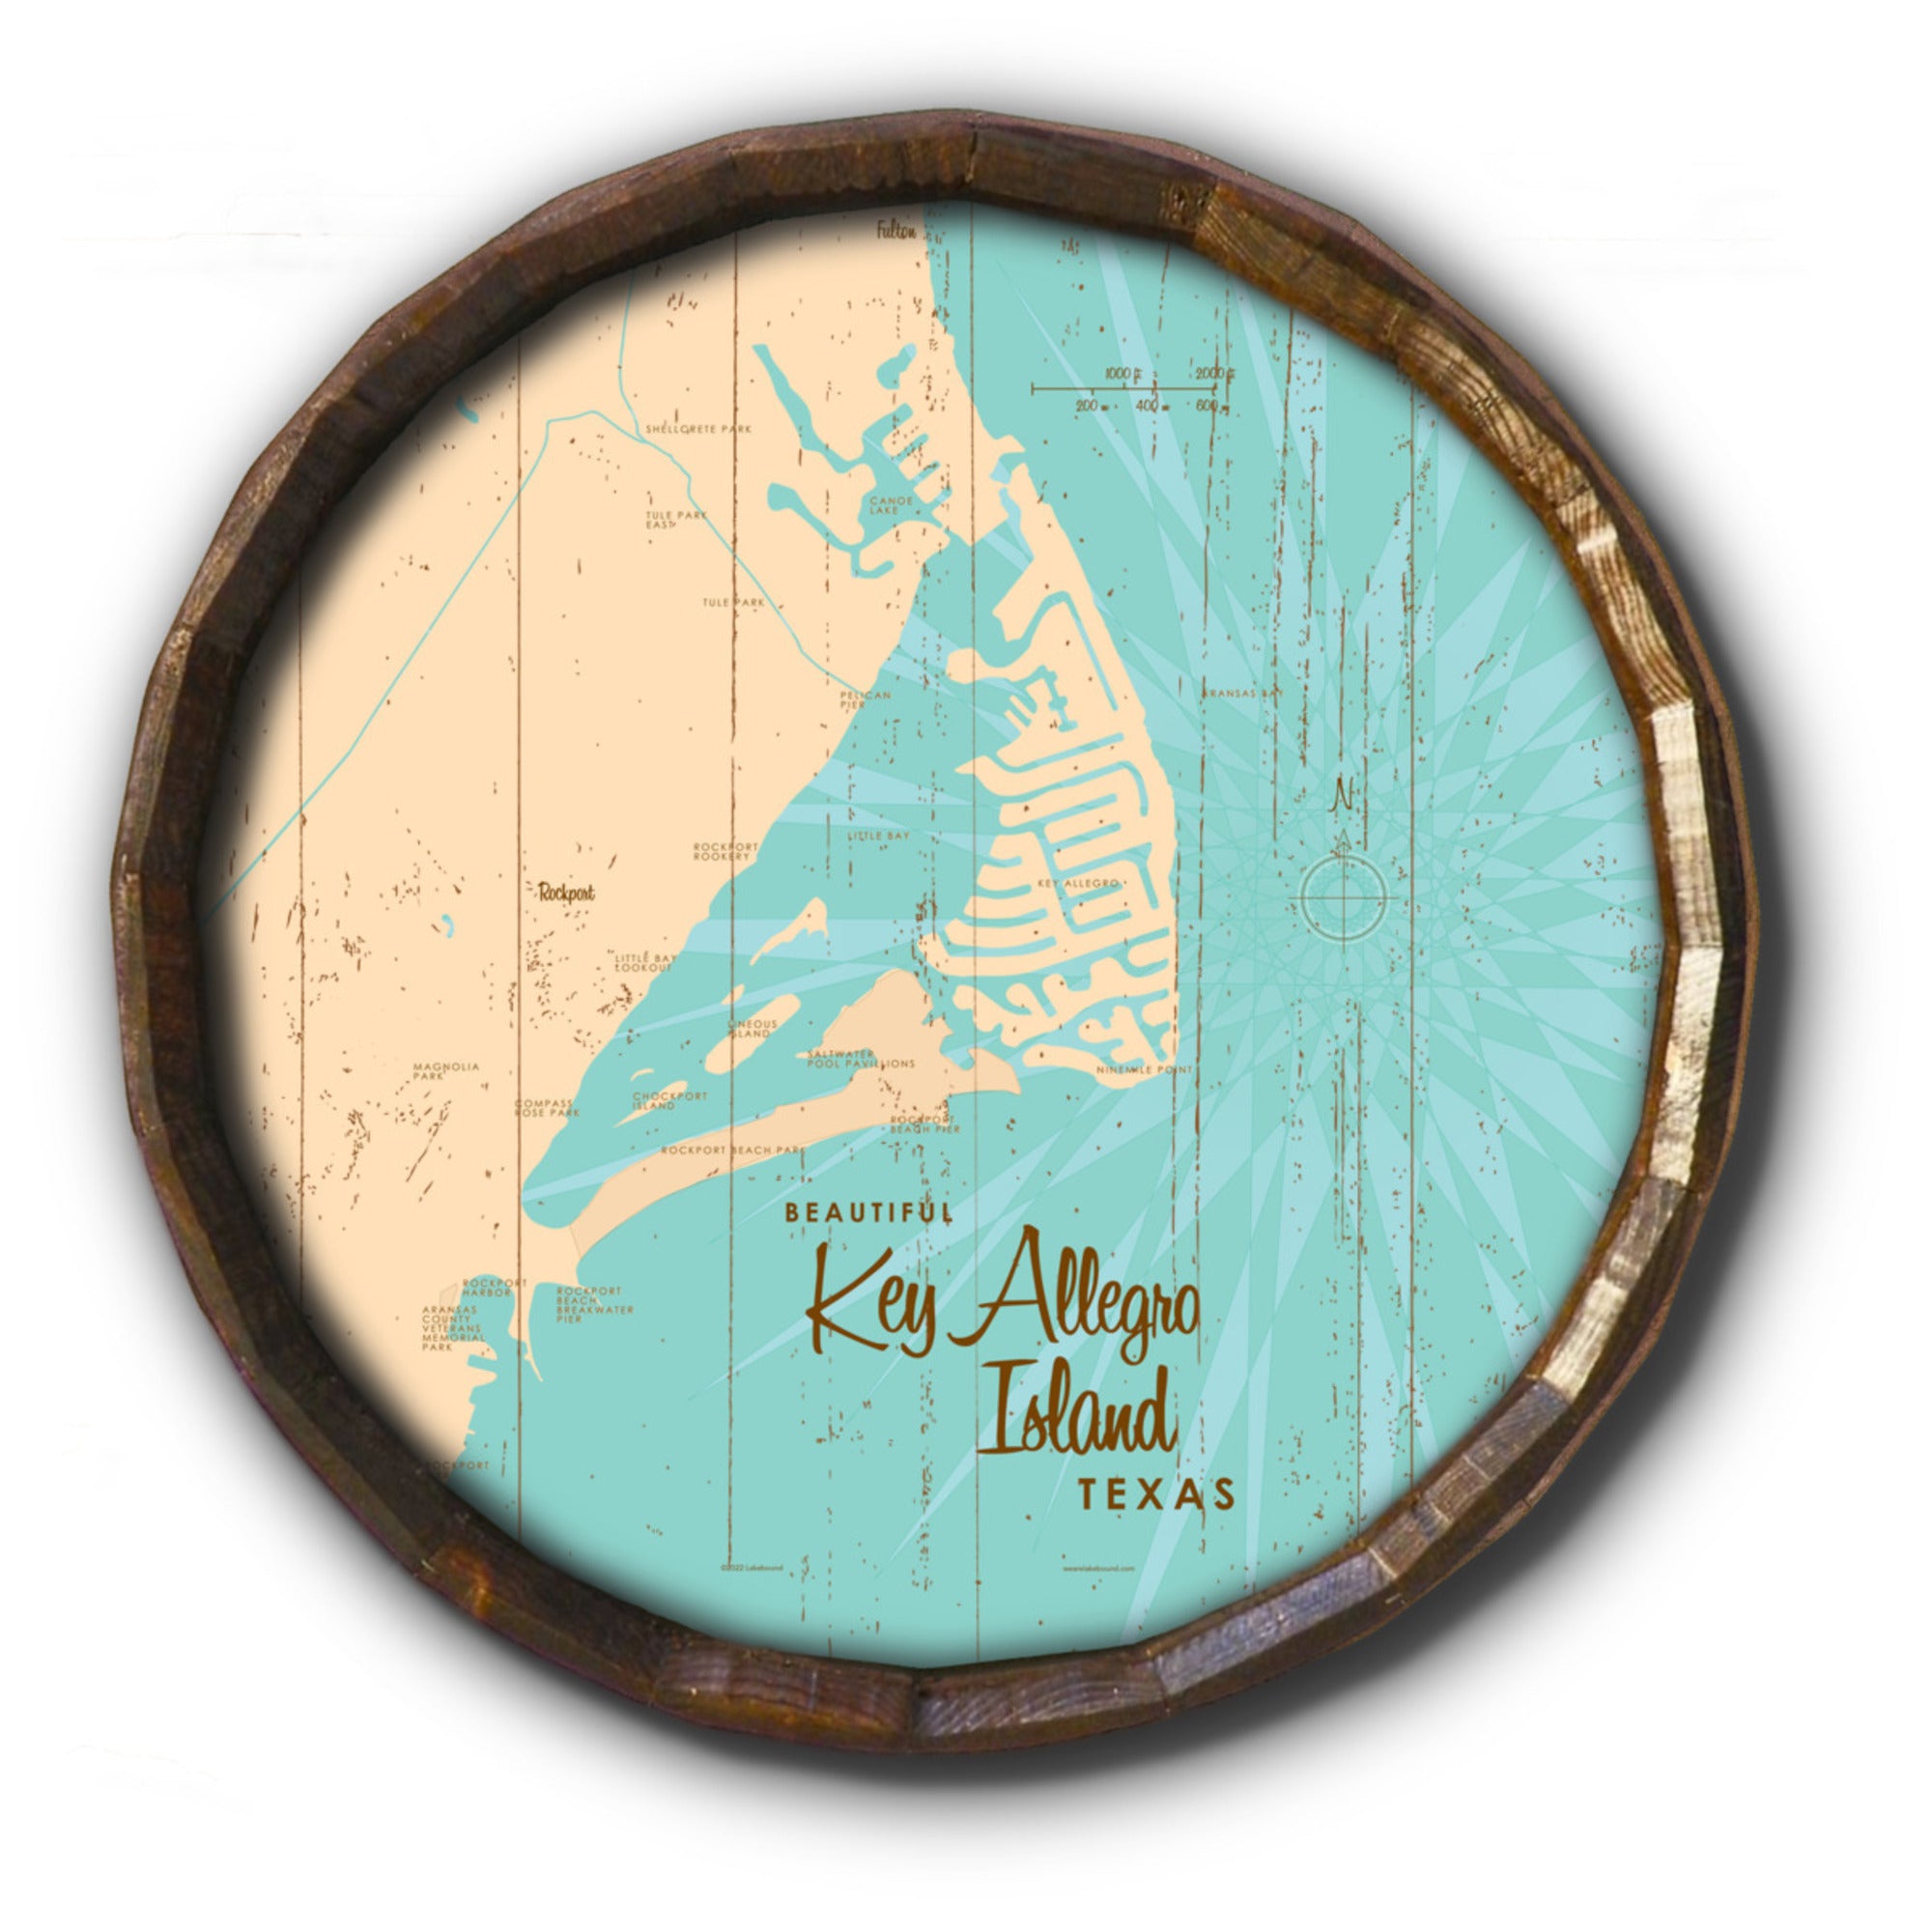 Key Allegro Island Texas, Rustic Barrel End Map Art